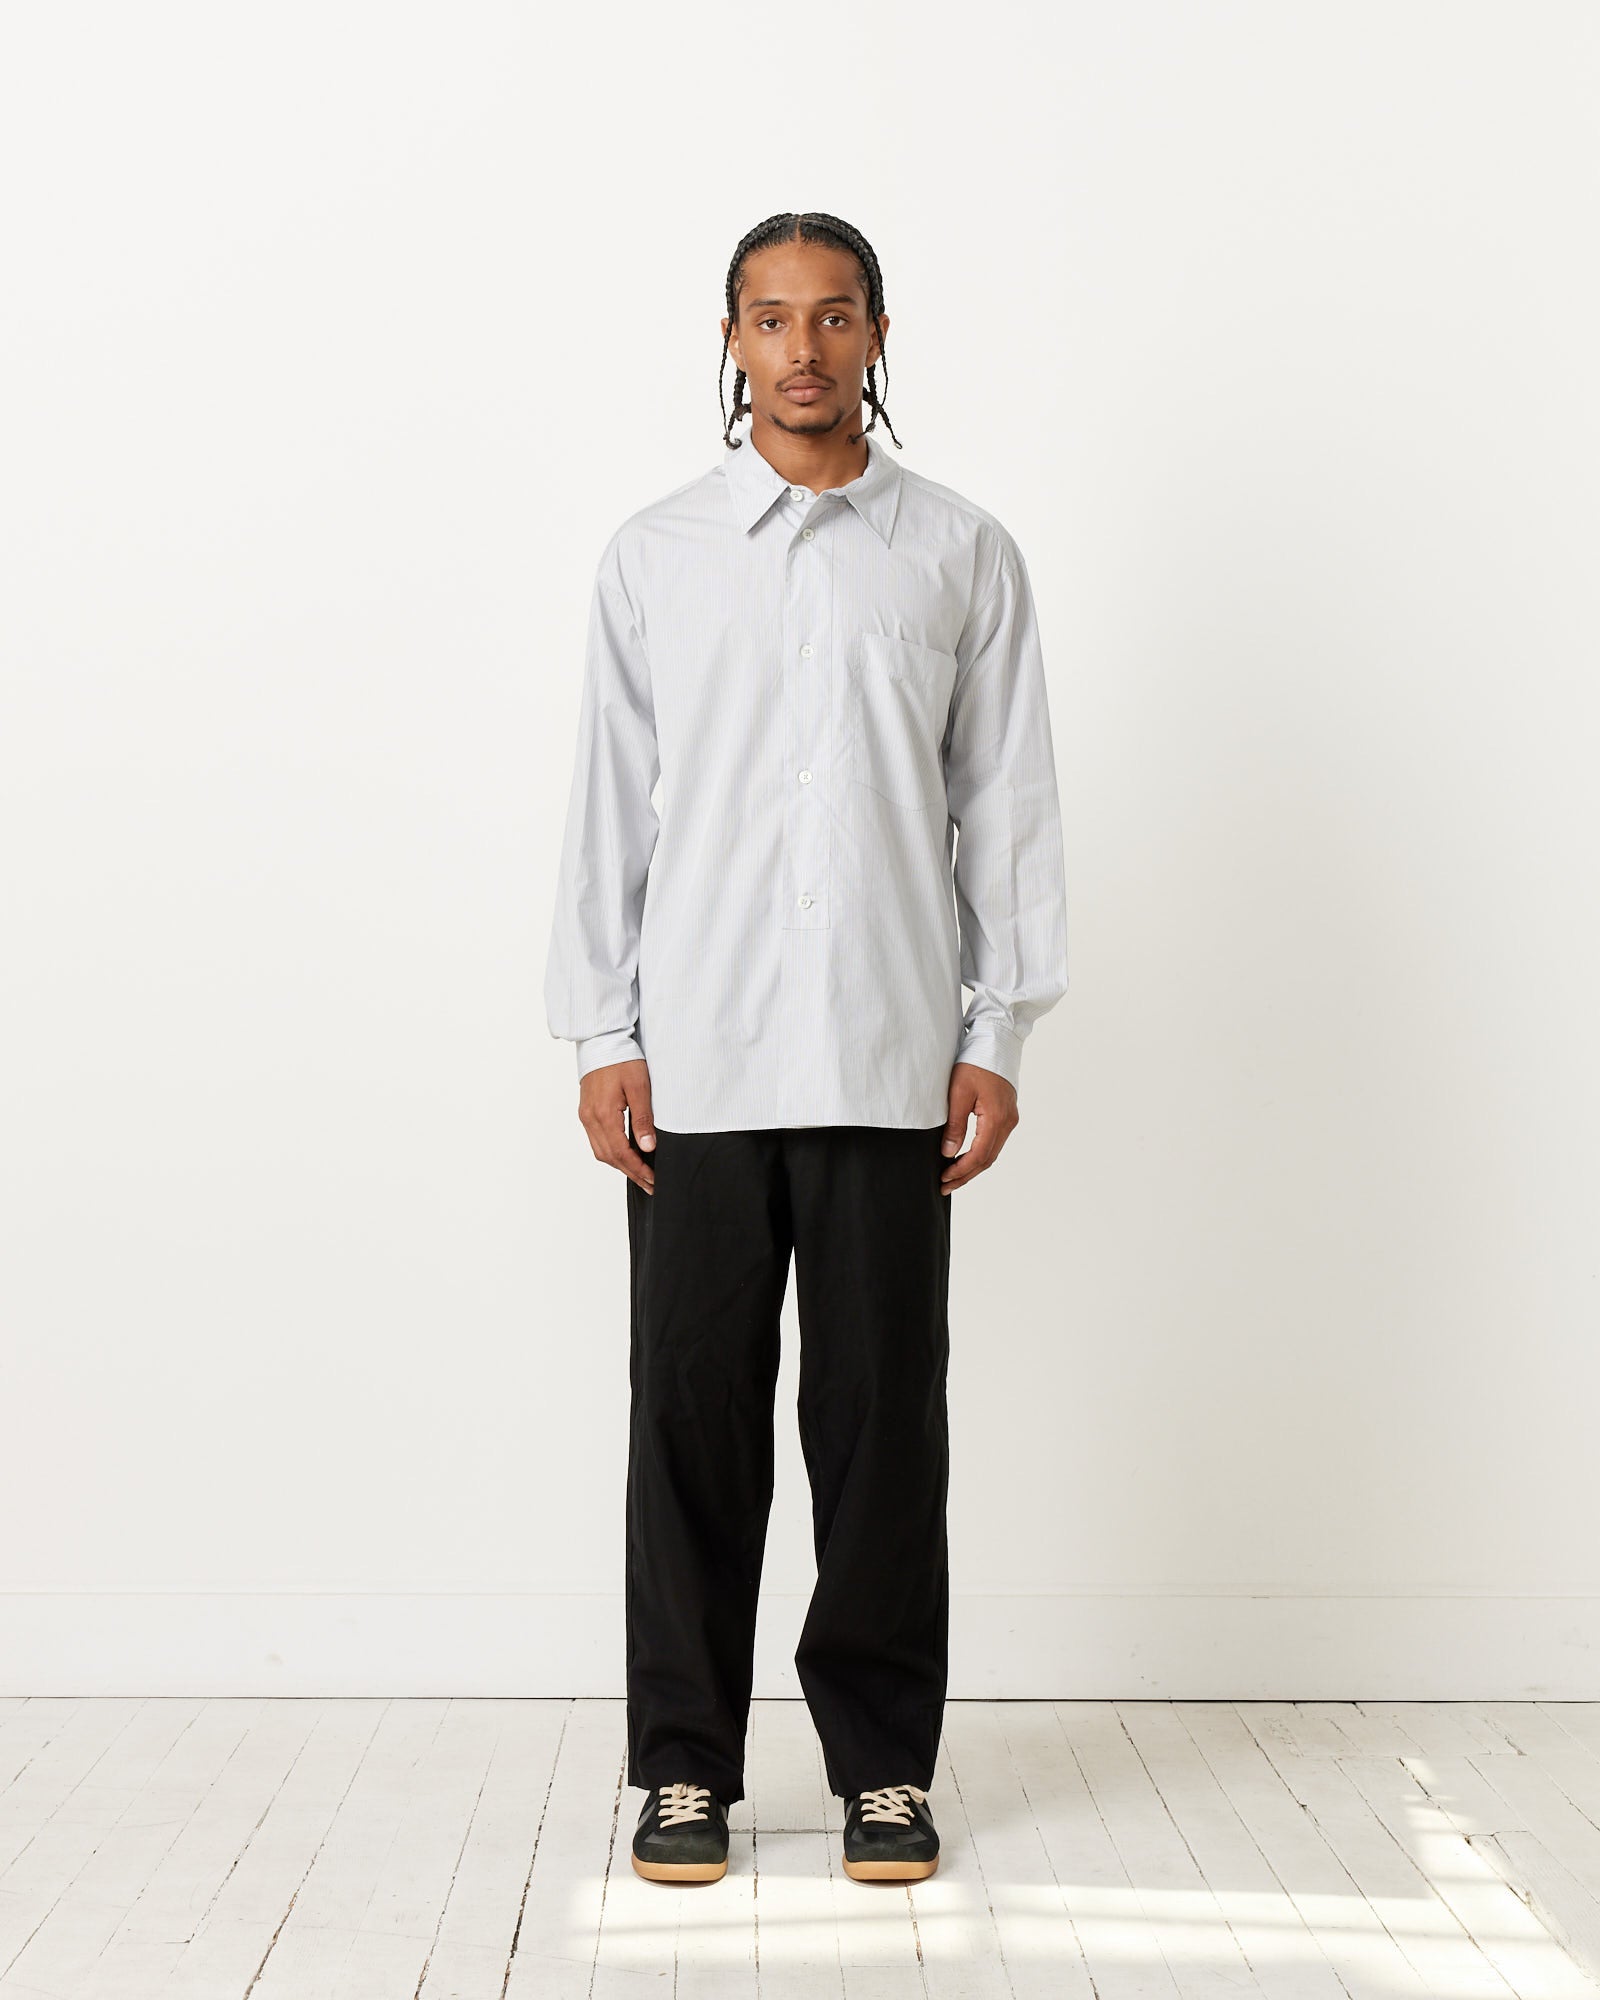 Half Placket Stripe Shirt in Grey/White